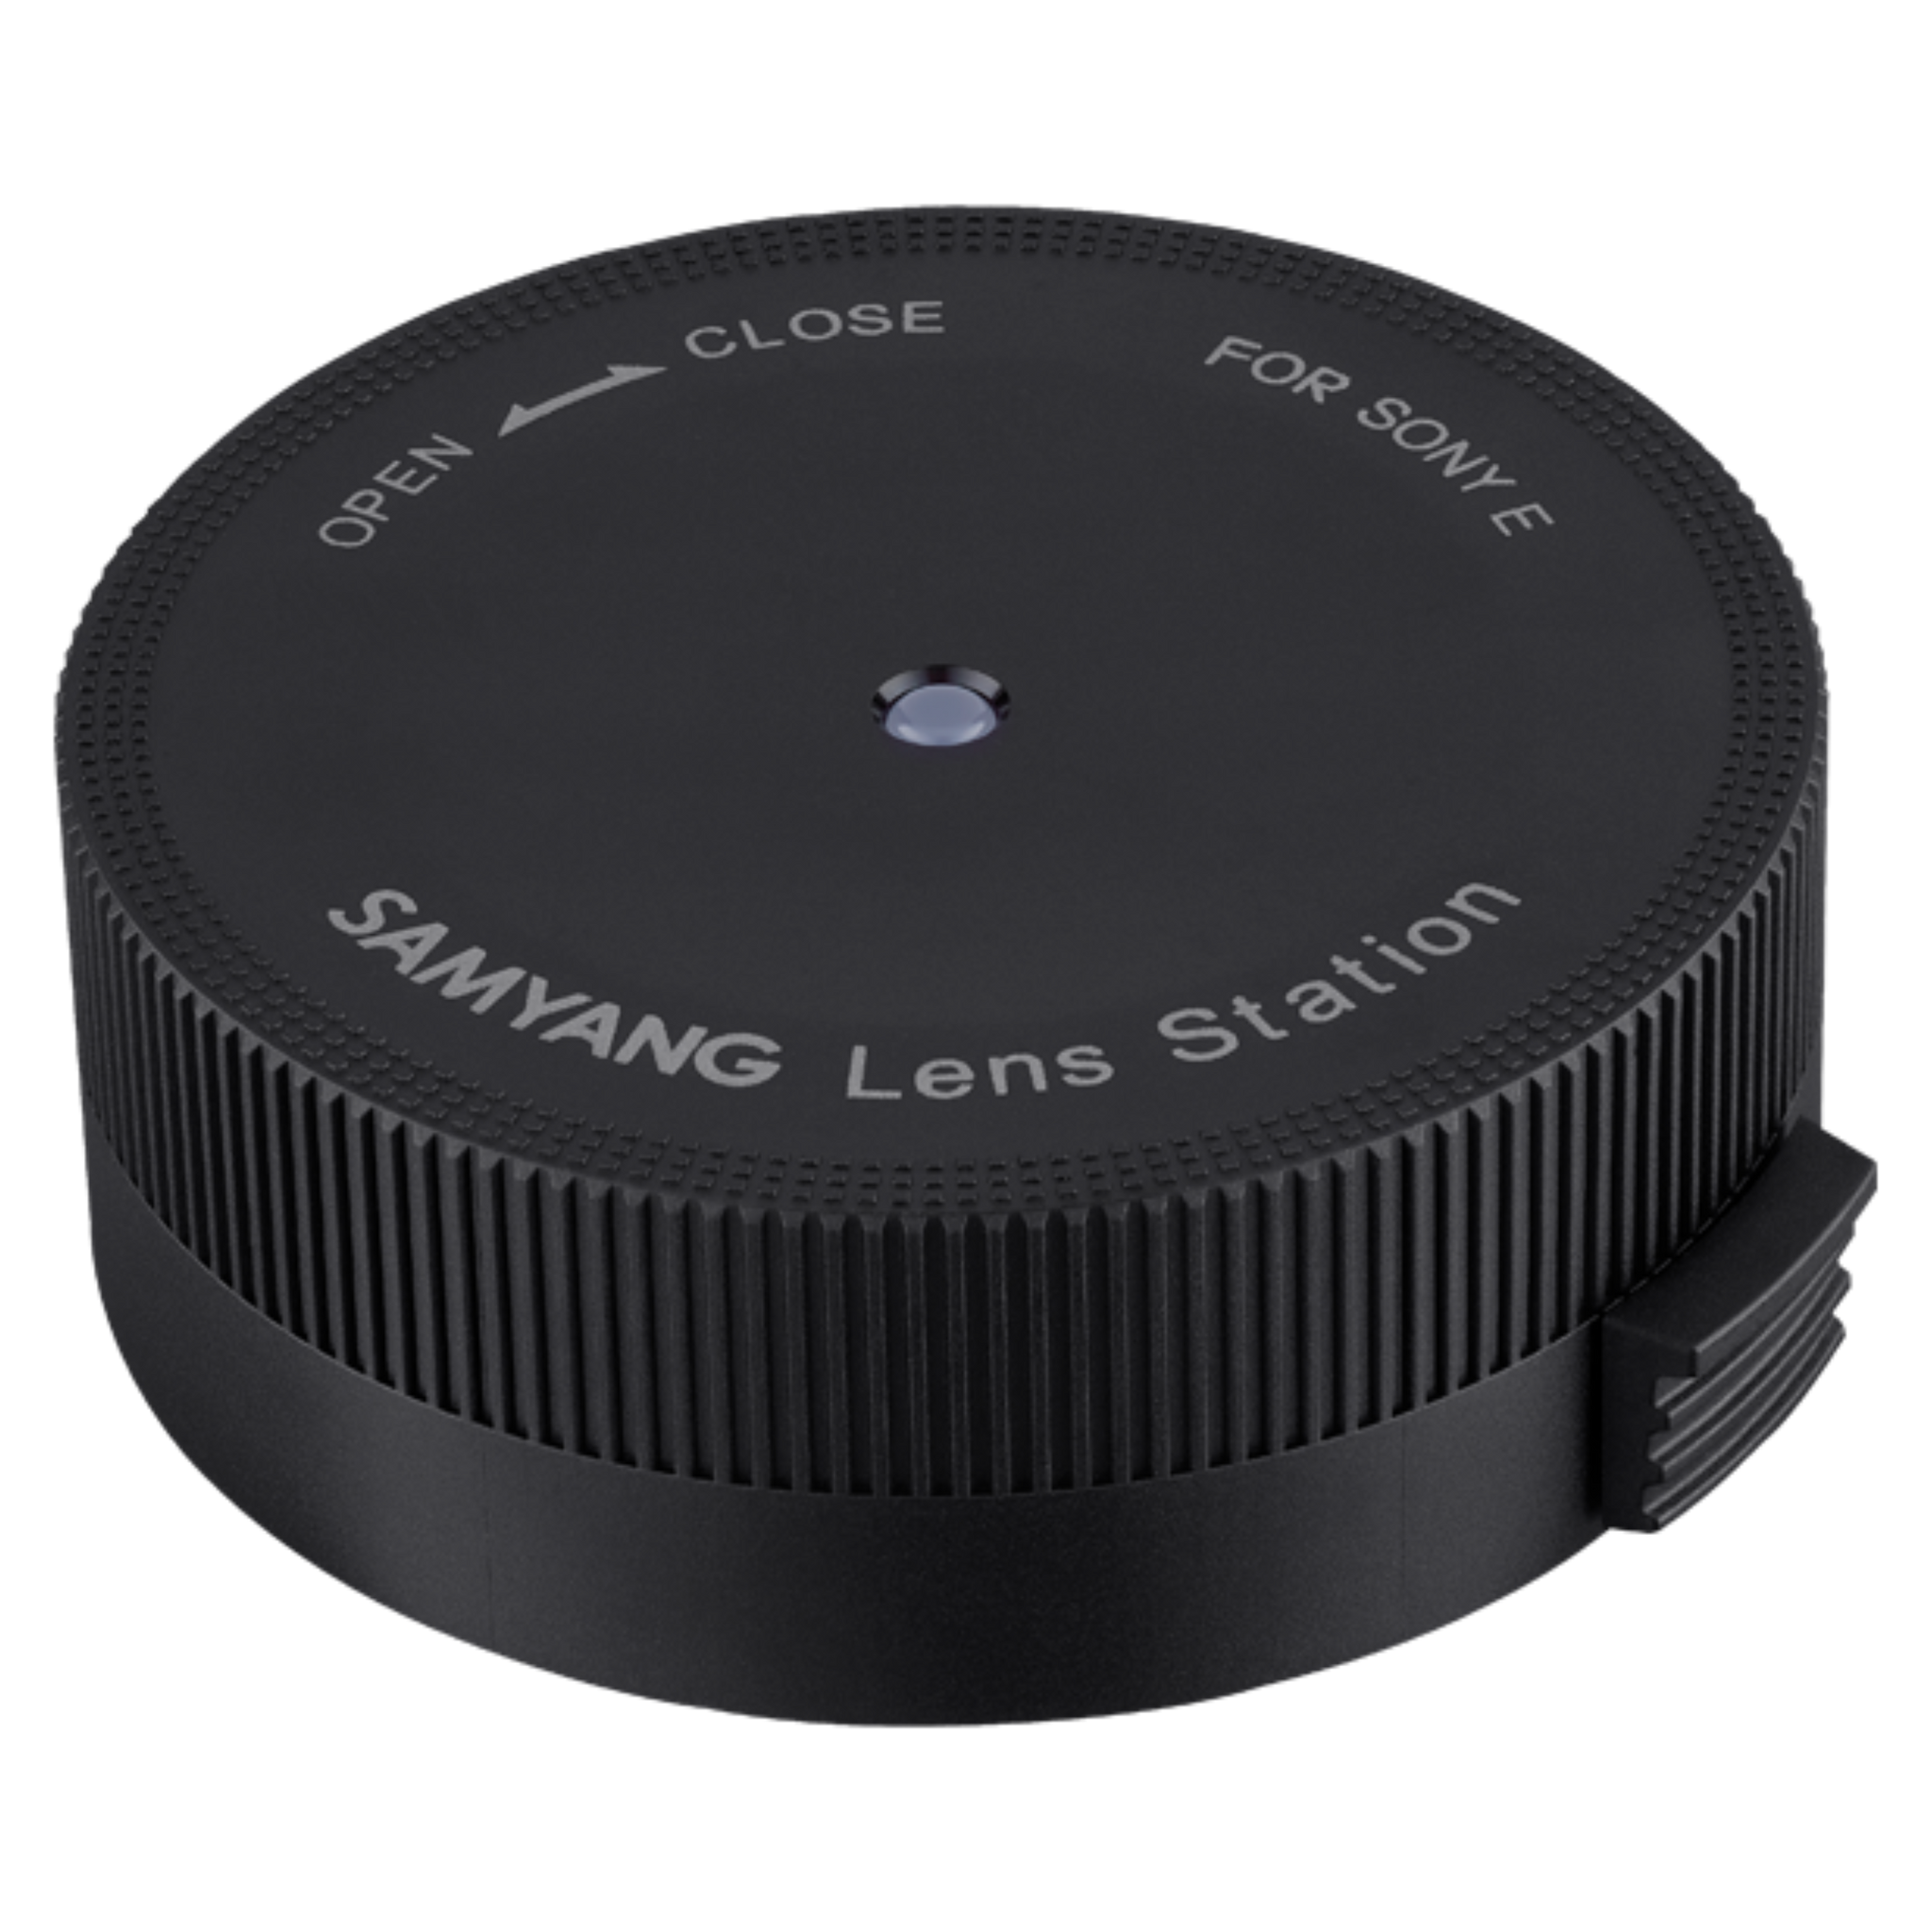 Samyang Lens Station-Lens Accessories-futuromic